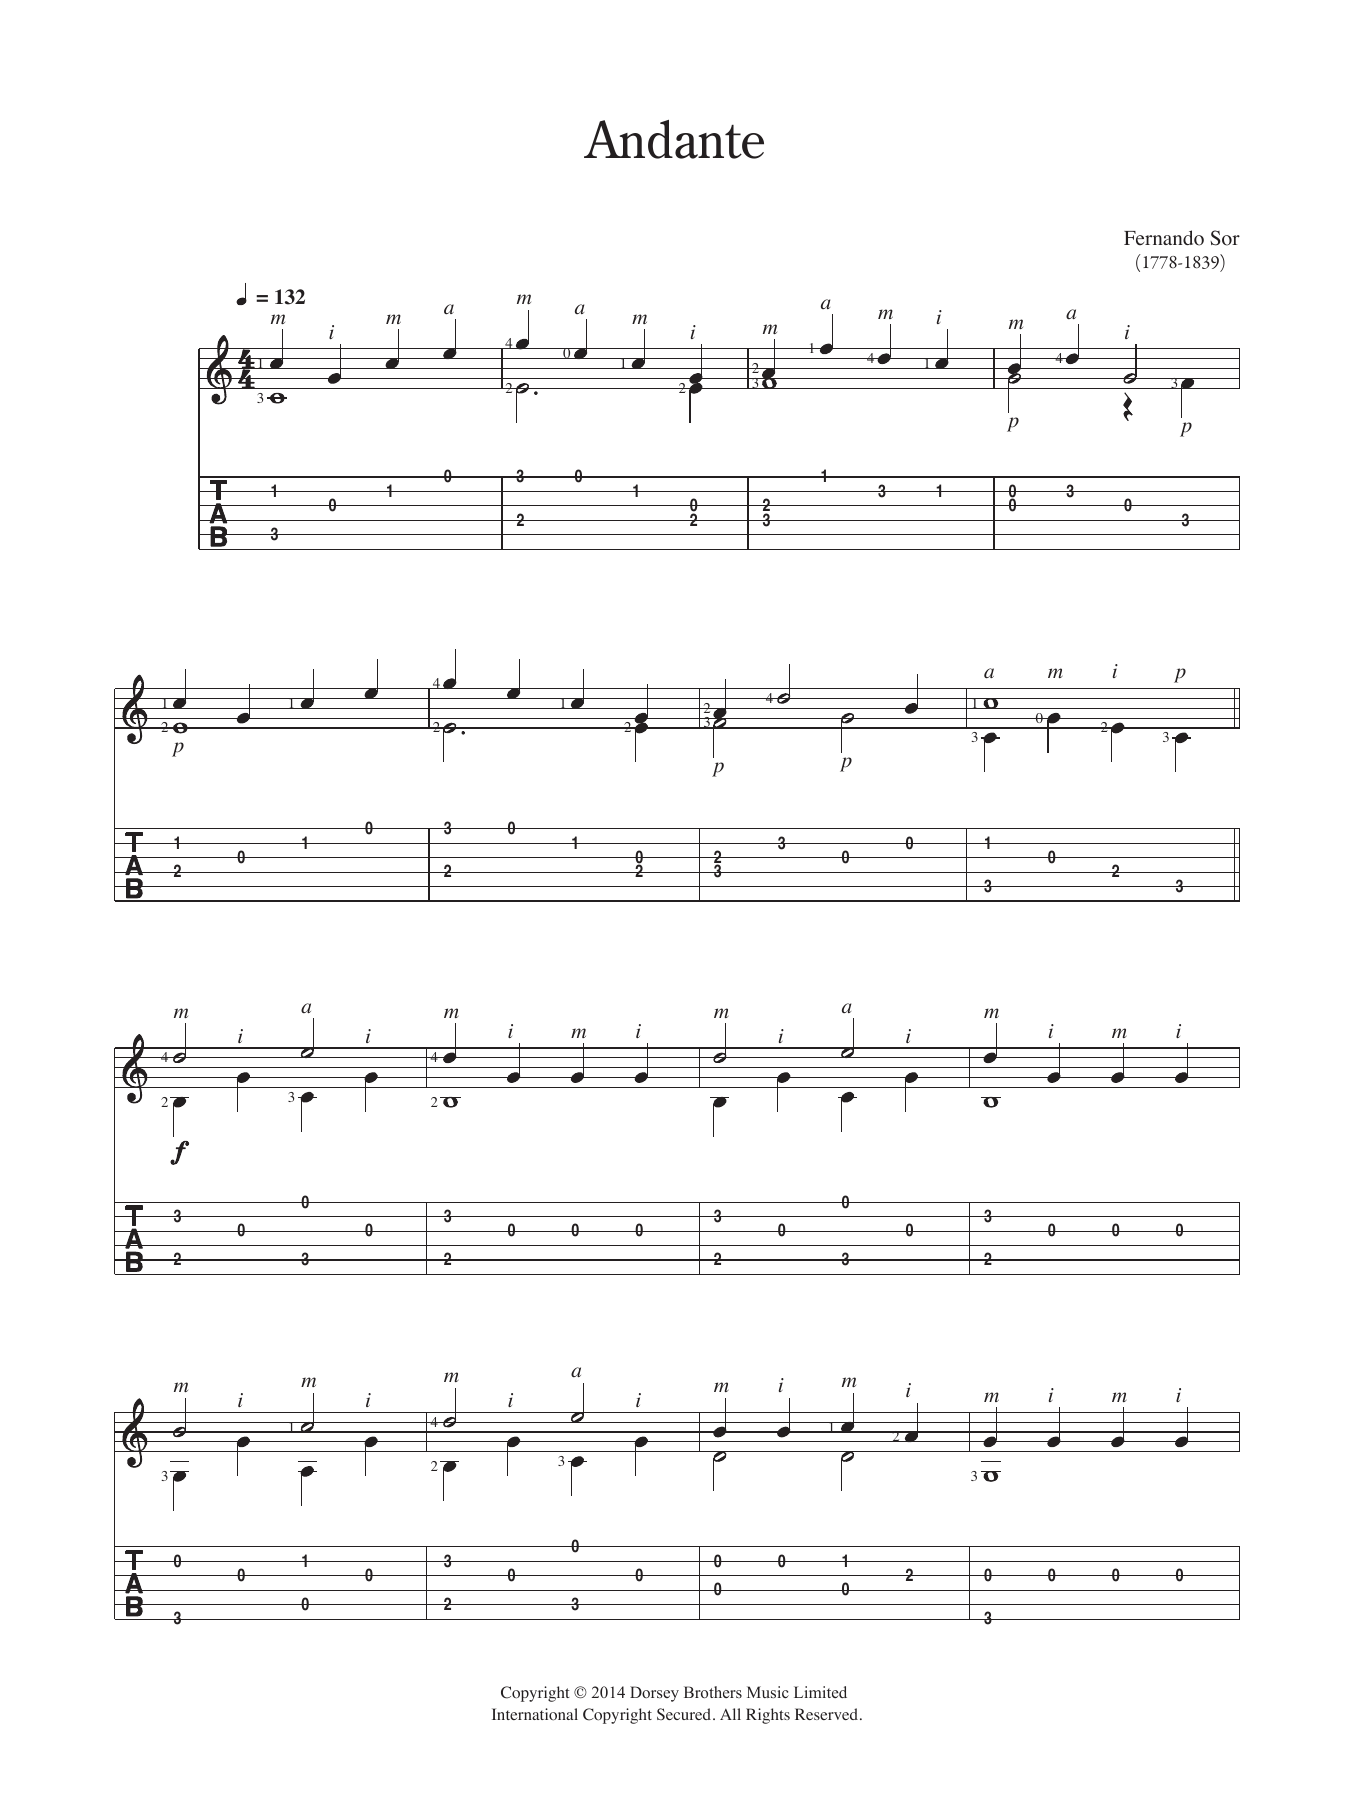 Fernando Sor Andante Sheet Music Notes & Chords for Guitar - Download or Print PDF